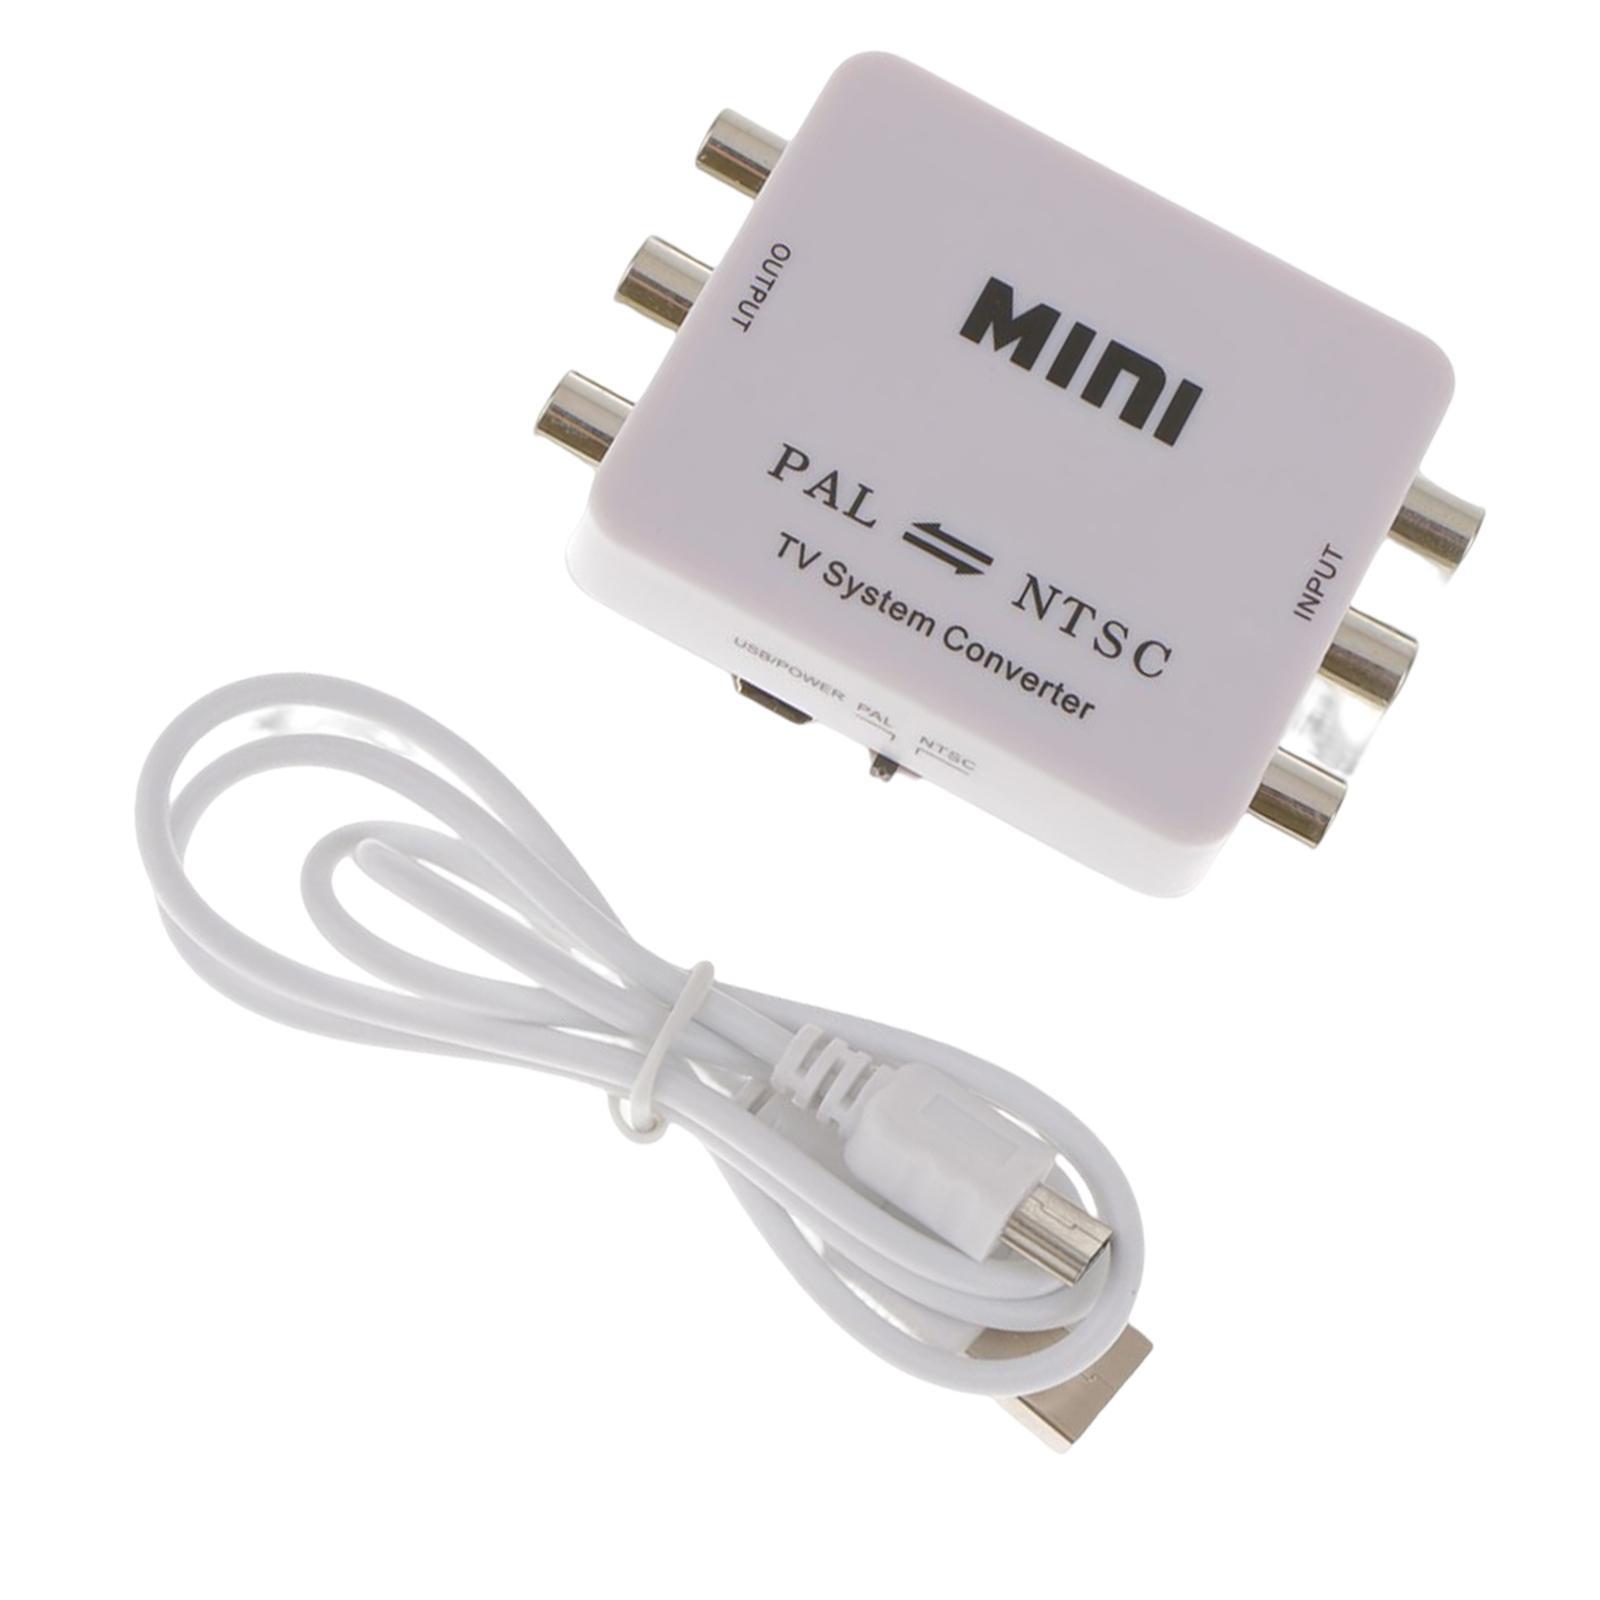 PAL/NTSC/ /NTSC -directional TV System Switcher Converter